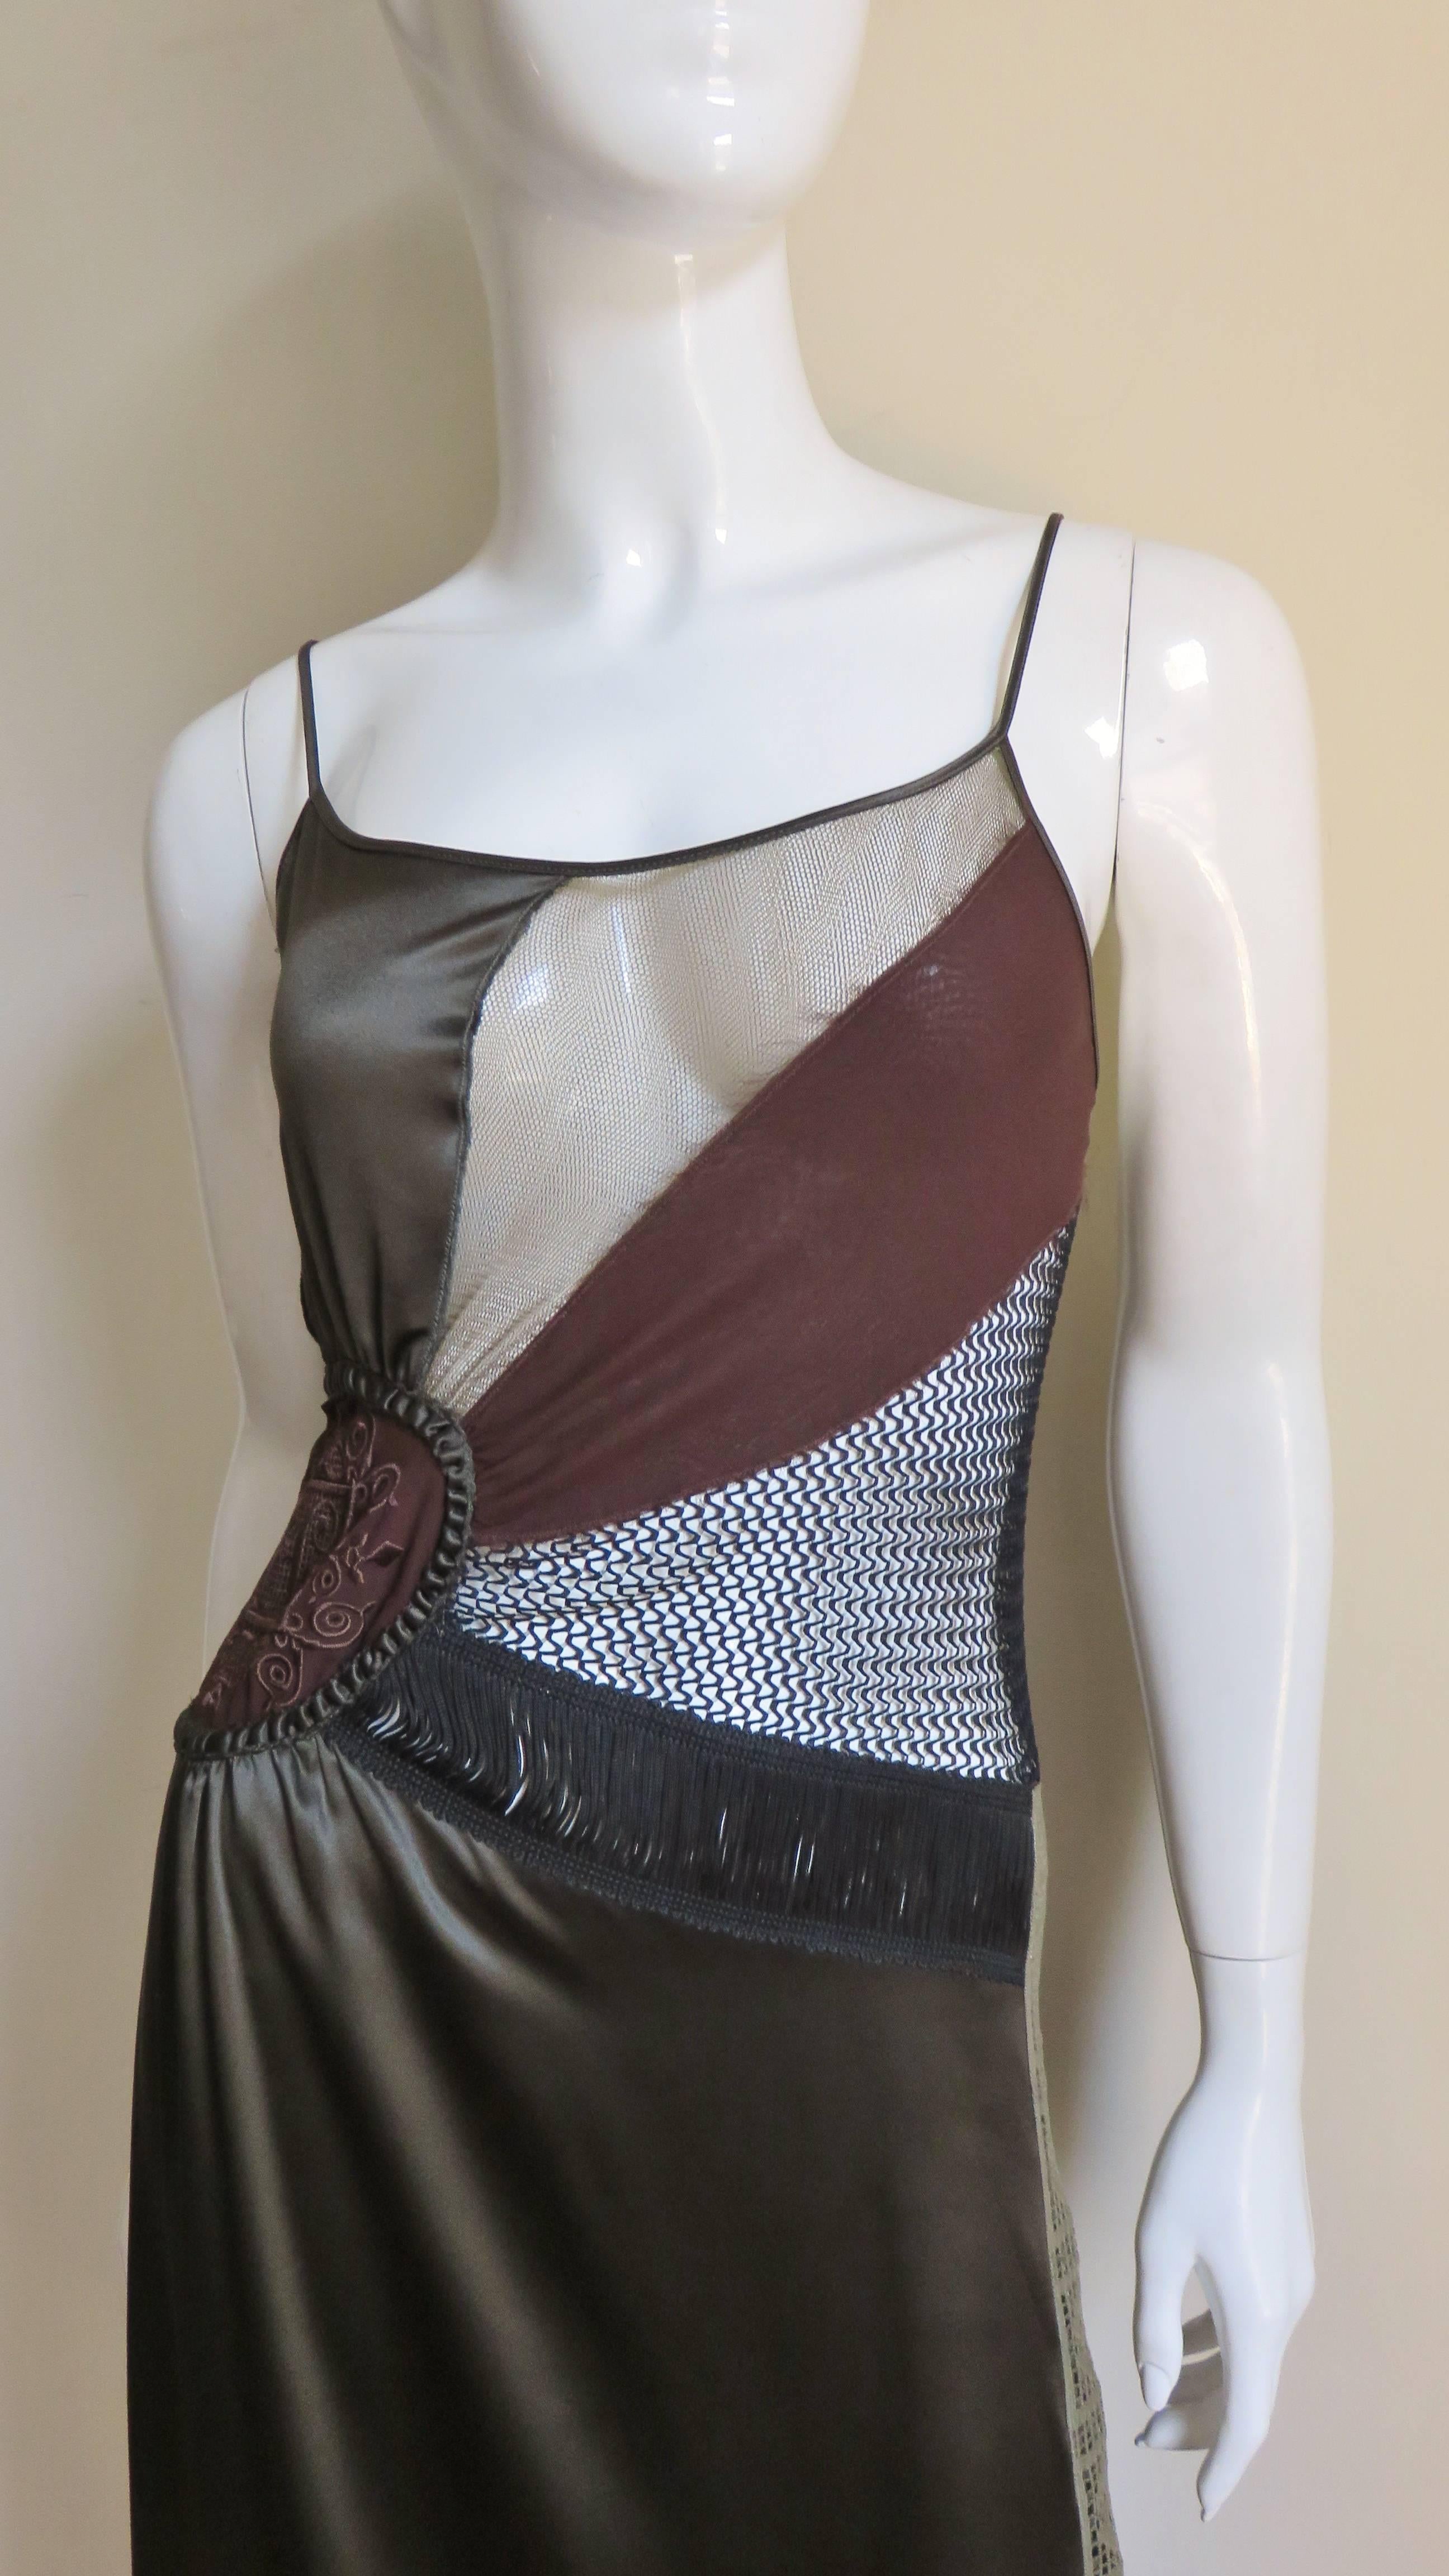 Black Jean Paul Gaultier Color Block Dress with Sheer Panels